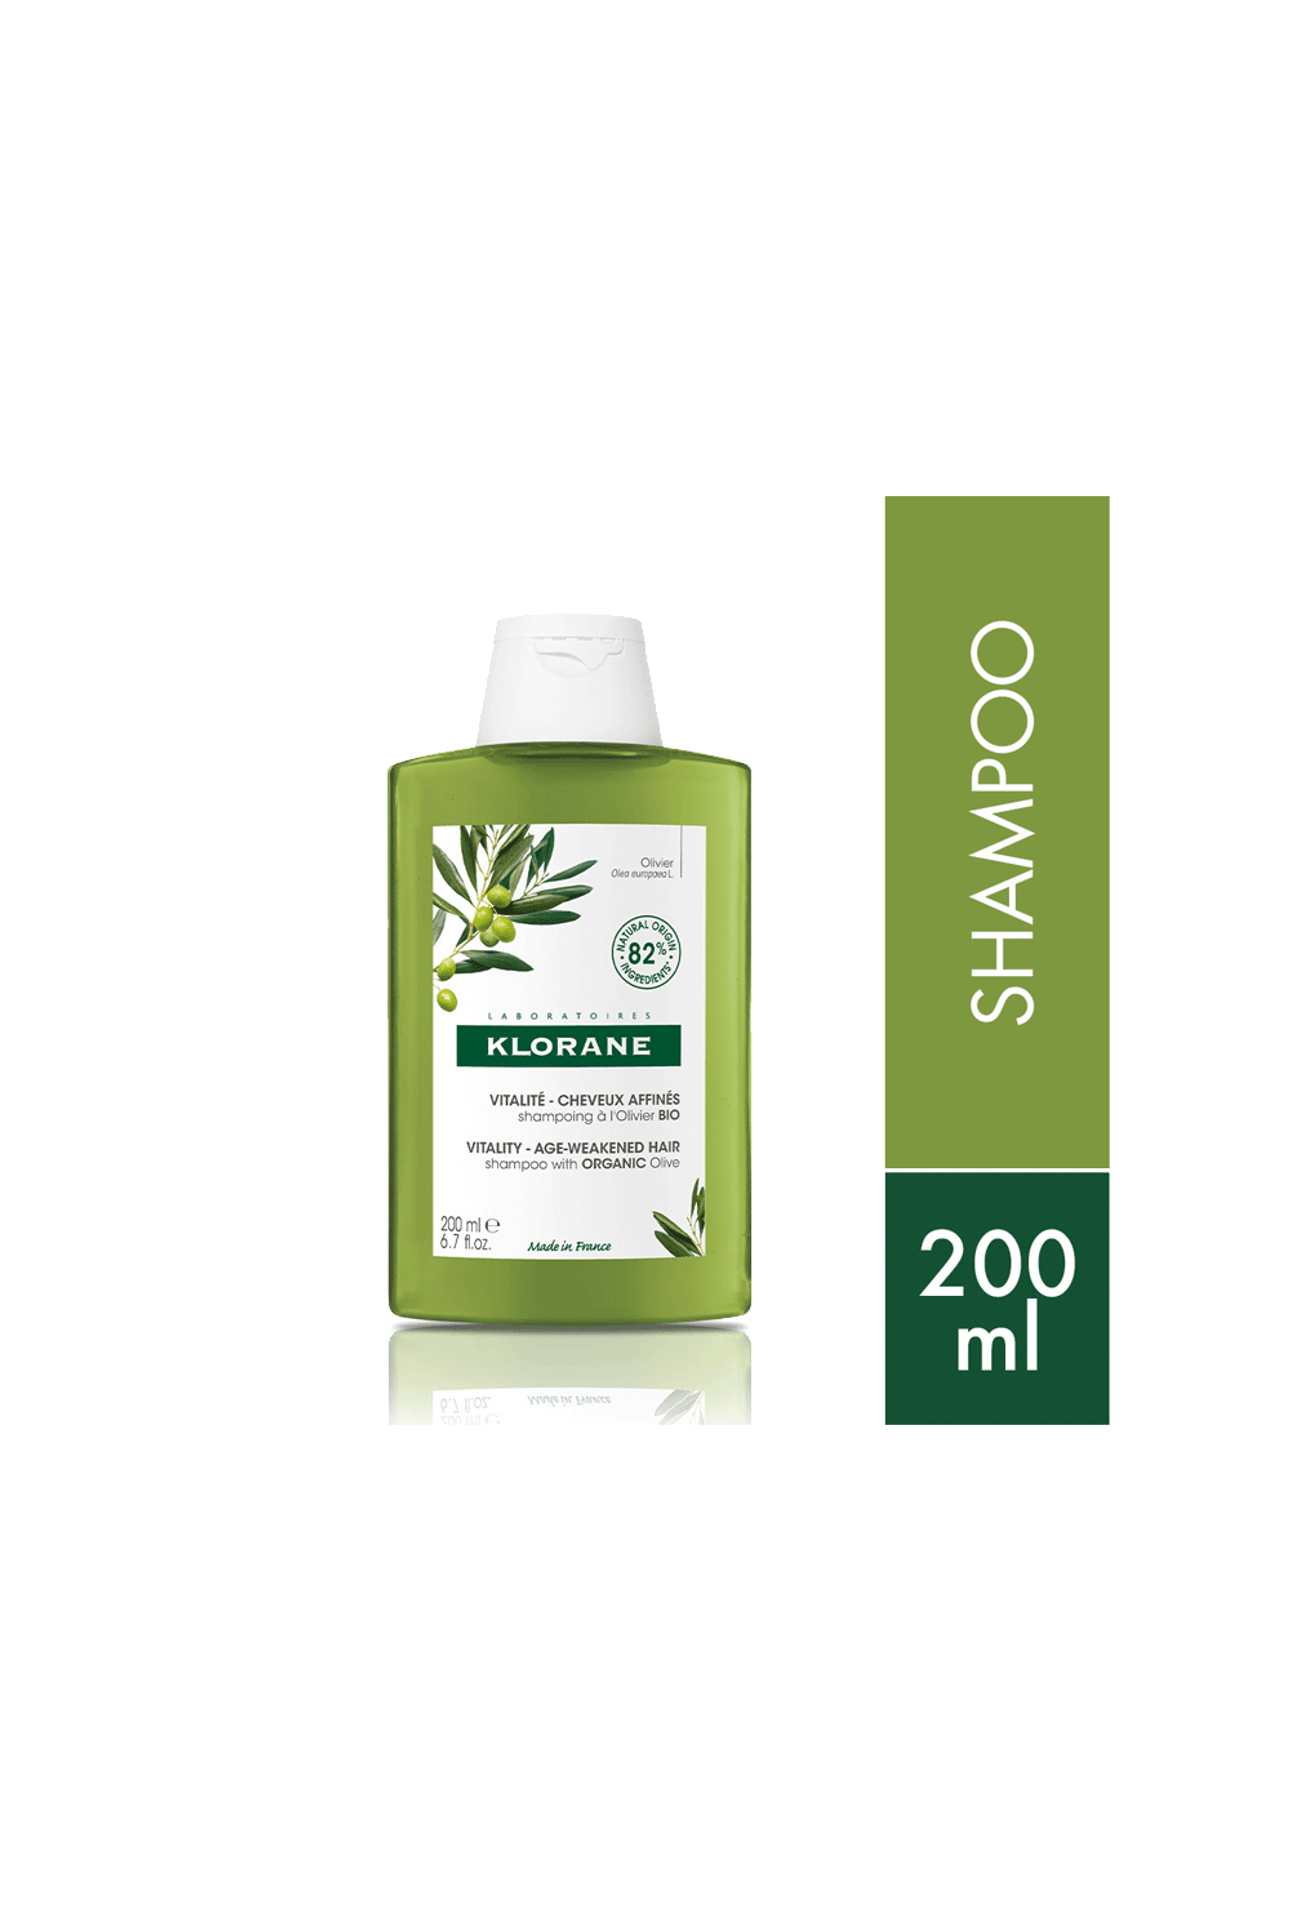 Klorane-Shampoo-de-Olivo-x-200-ml-7798095419816